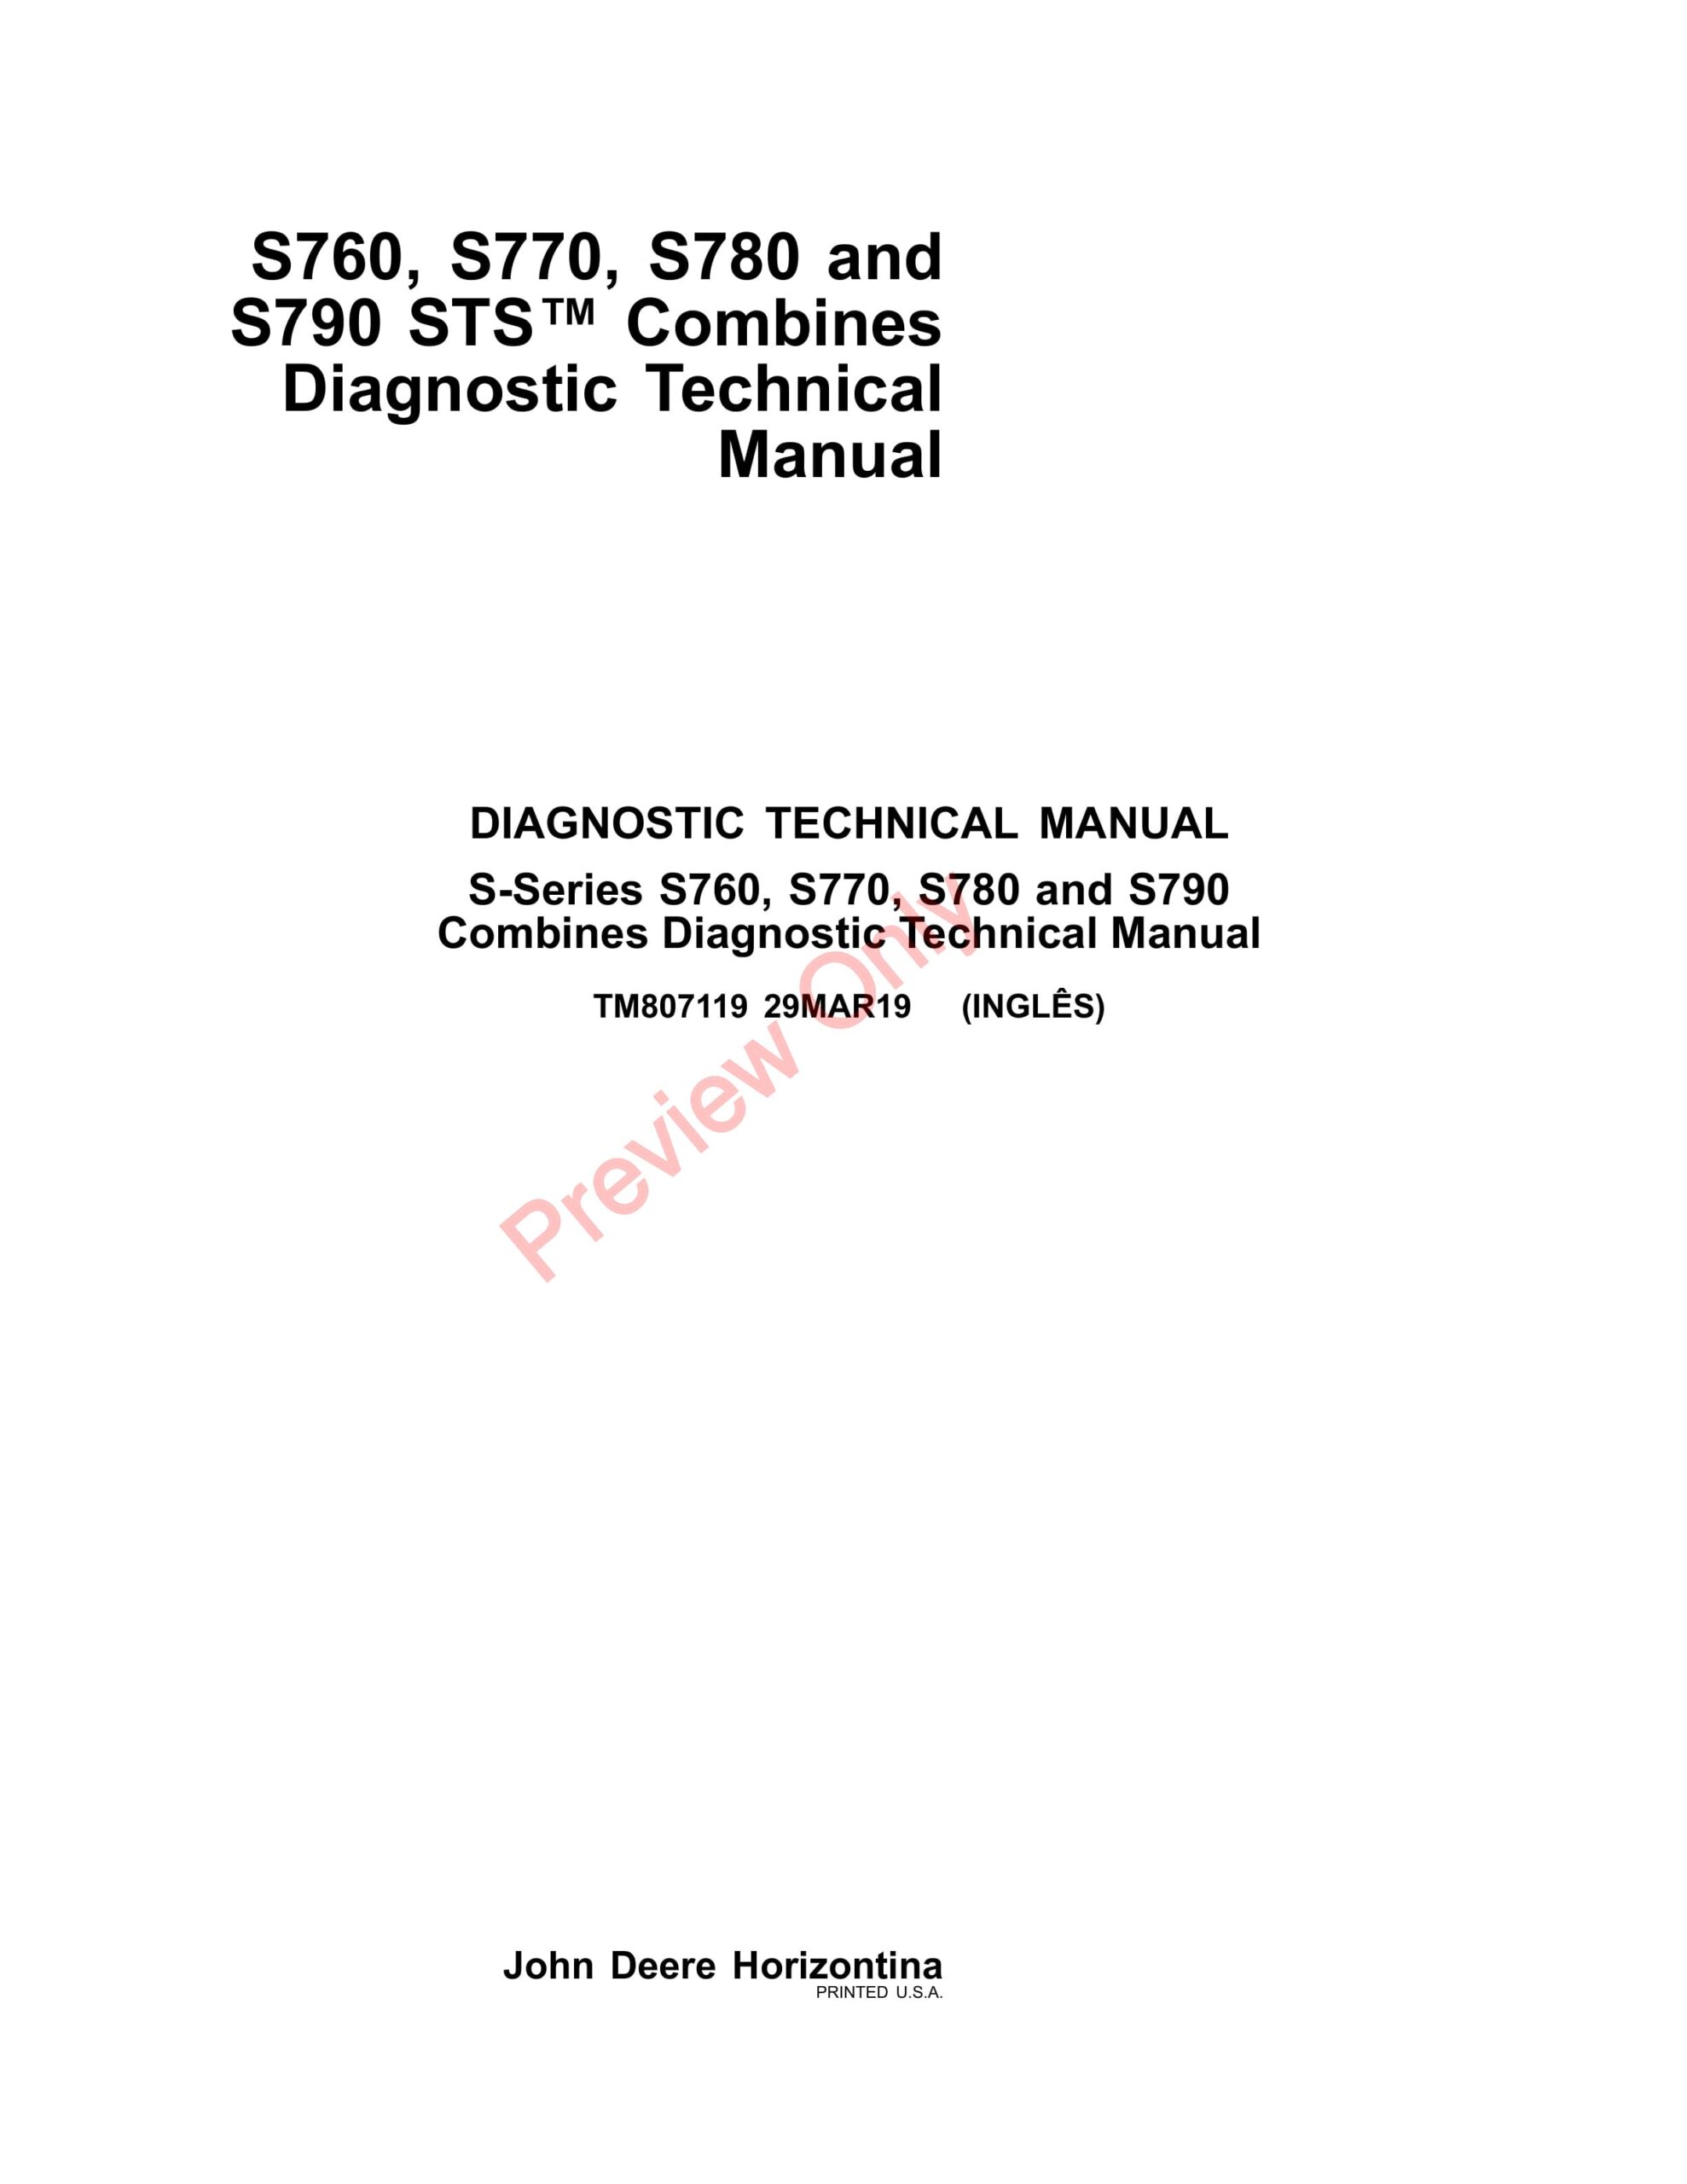 John Deere S760, S770, S780 and S790 Combines Diagnostic Technical Manual TM807119 29MAR19-1